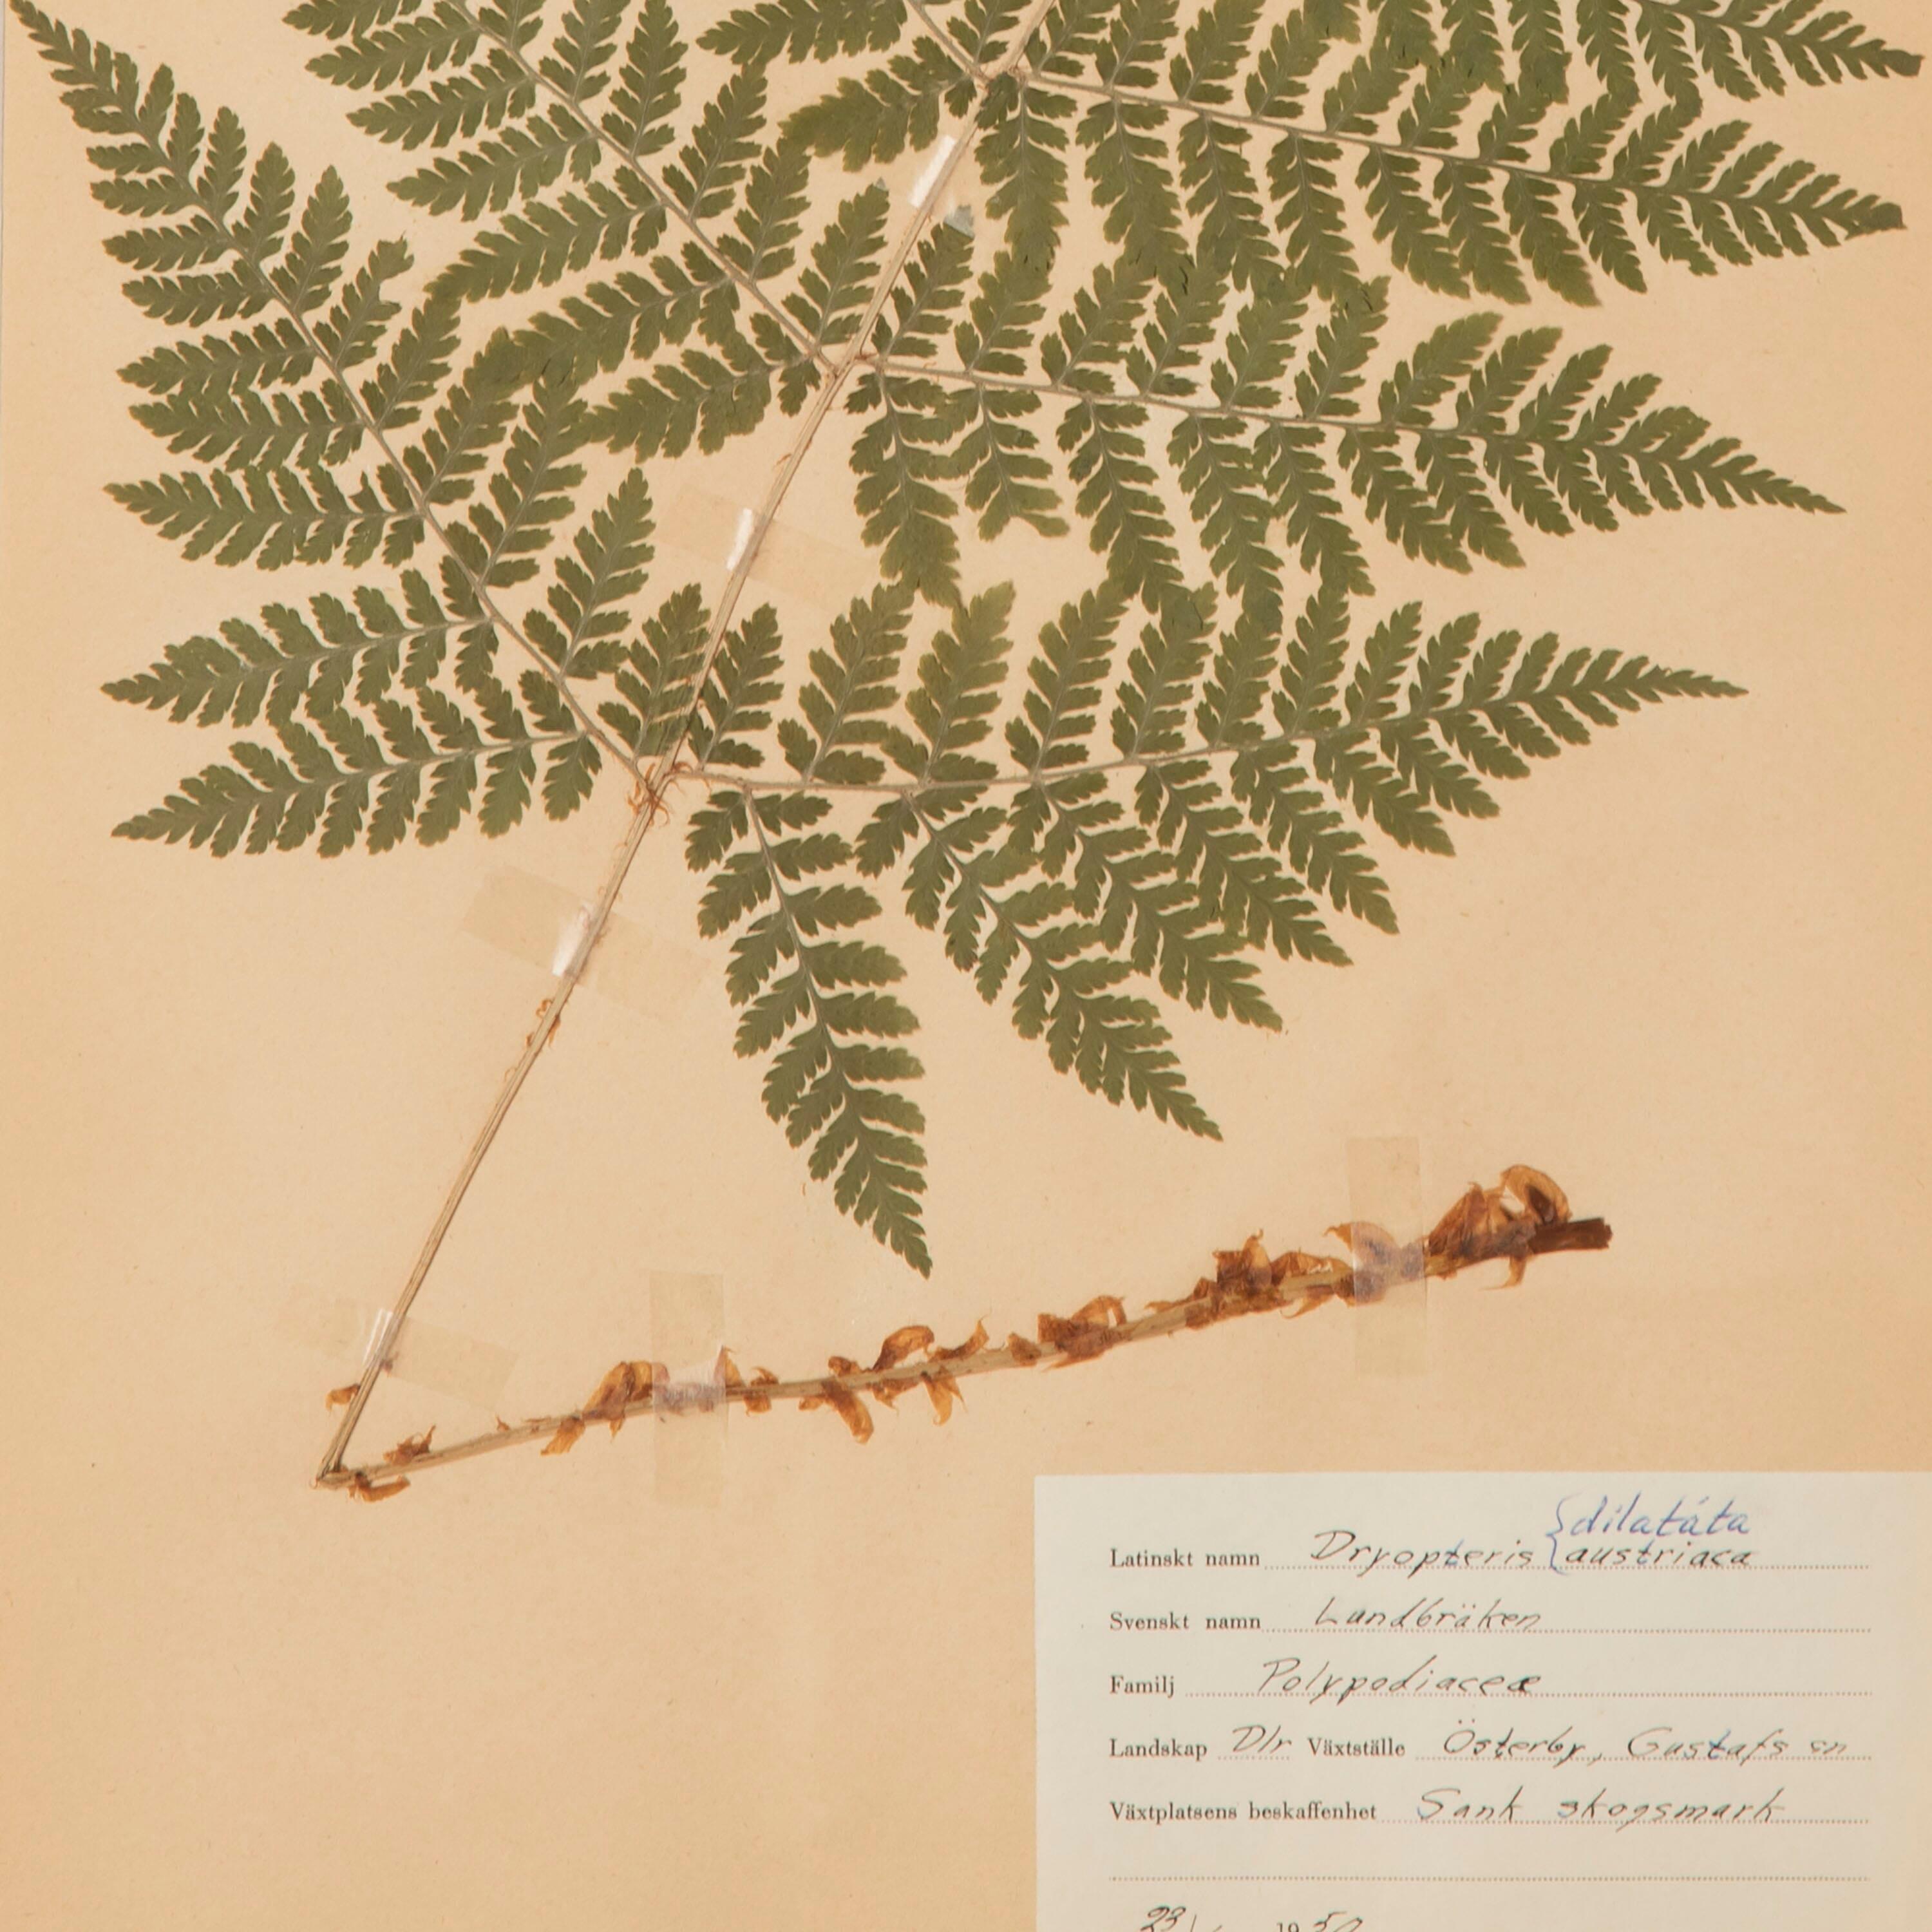 Paper Collection of Eight 19th Century Swedish Herbarium Ferns